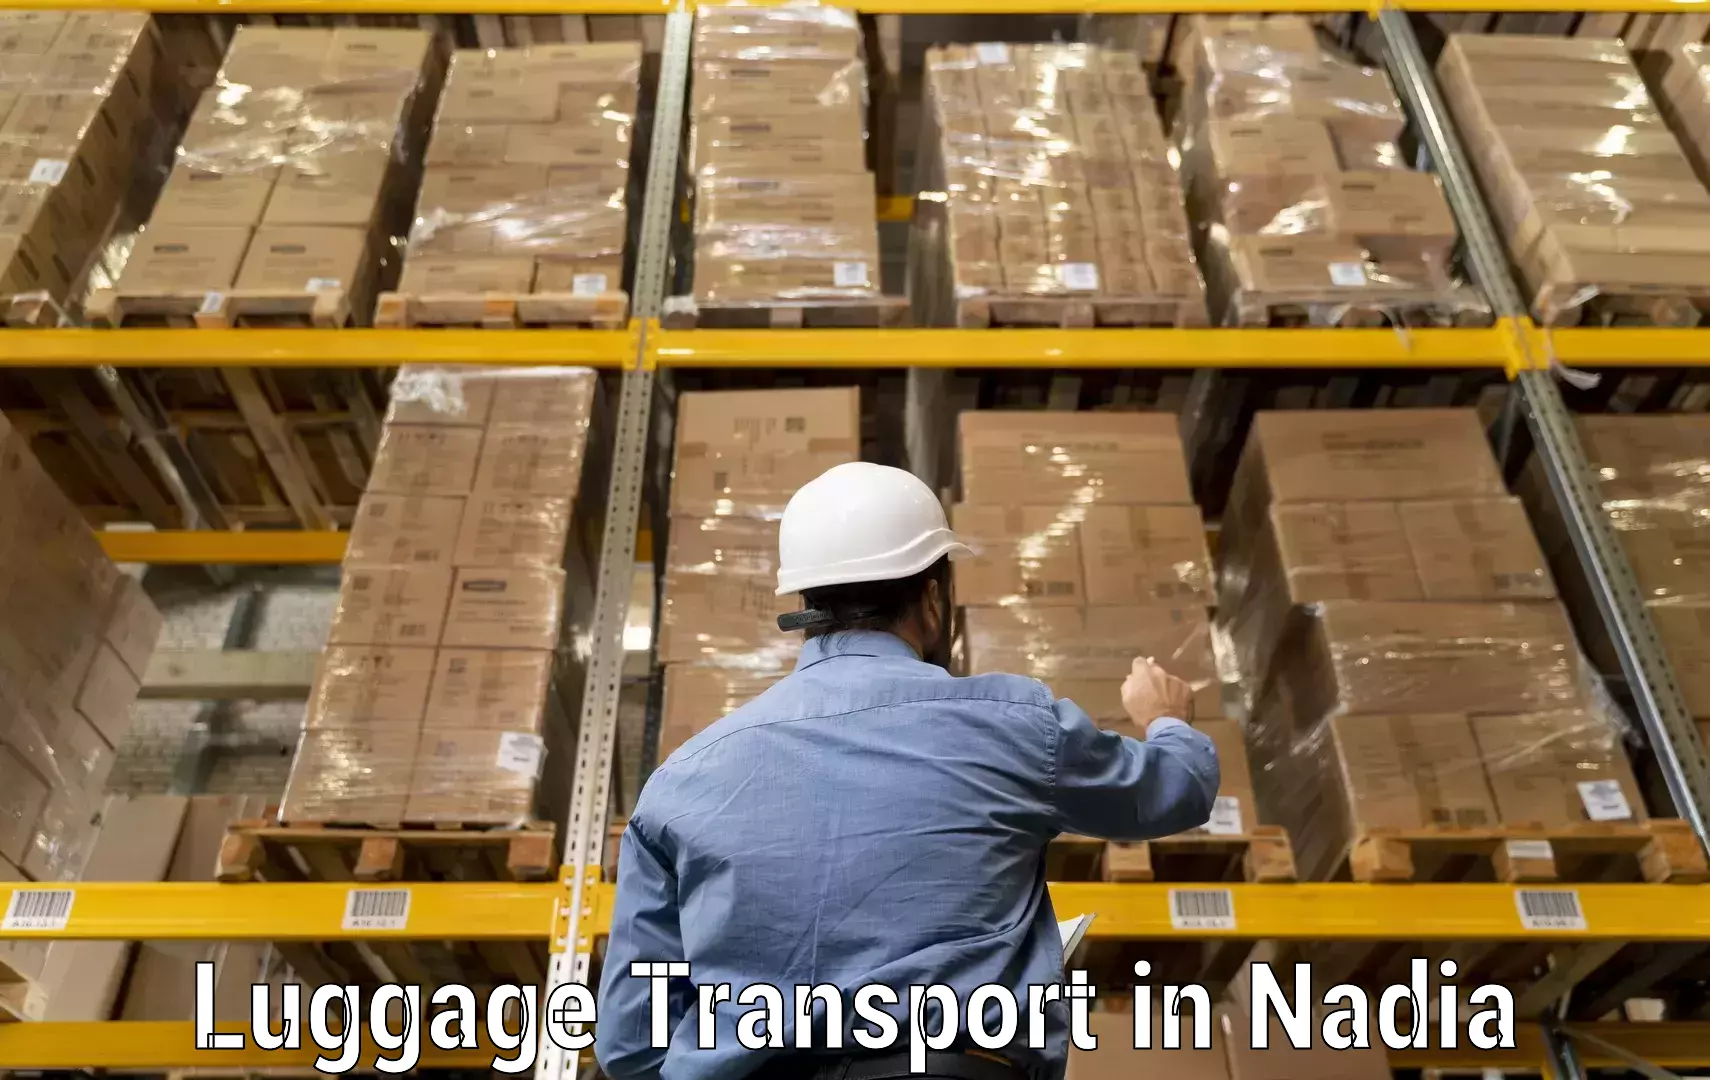 Professional baggage transport in Nadia